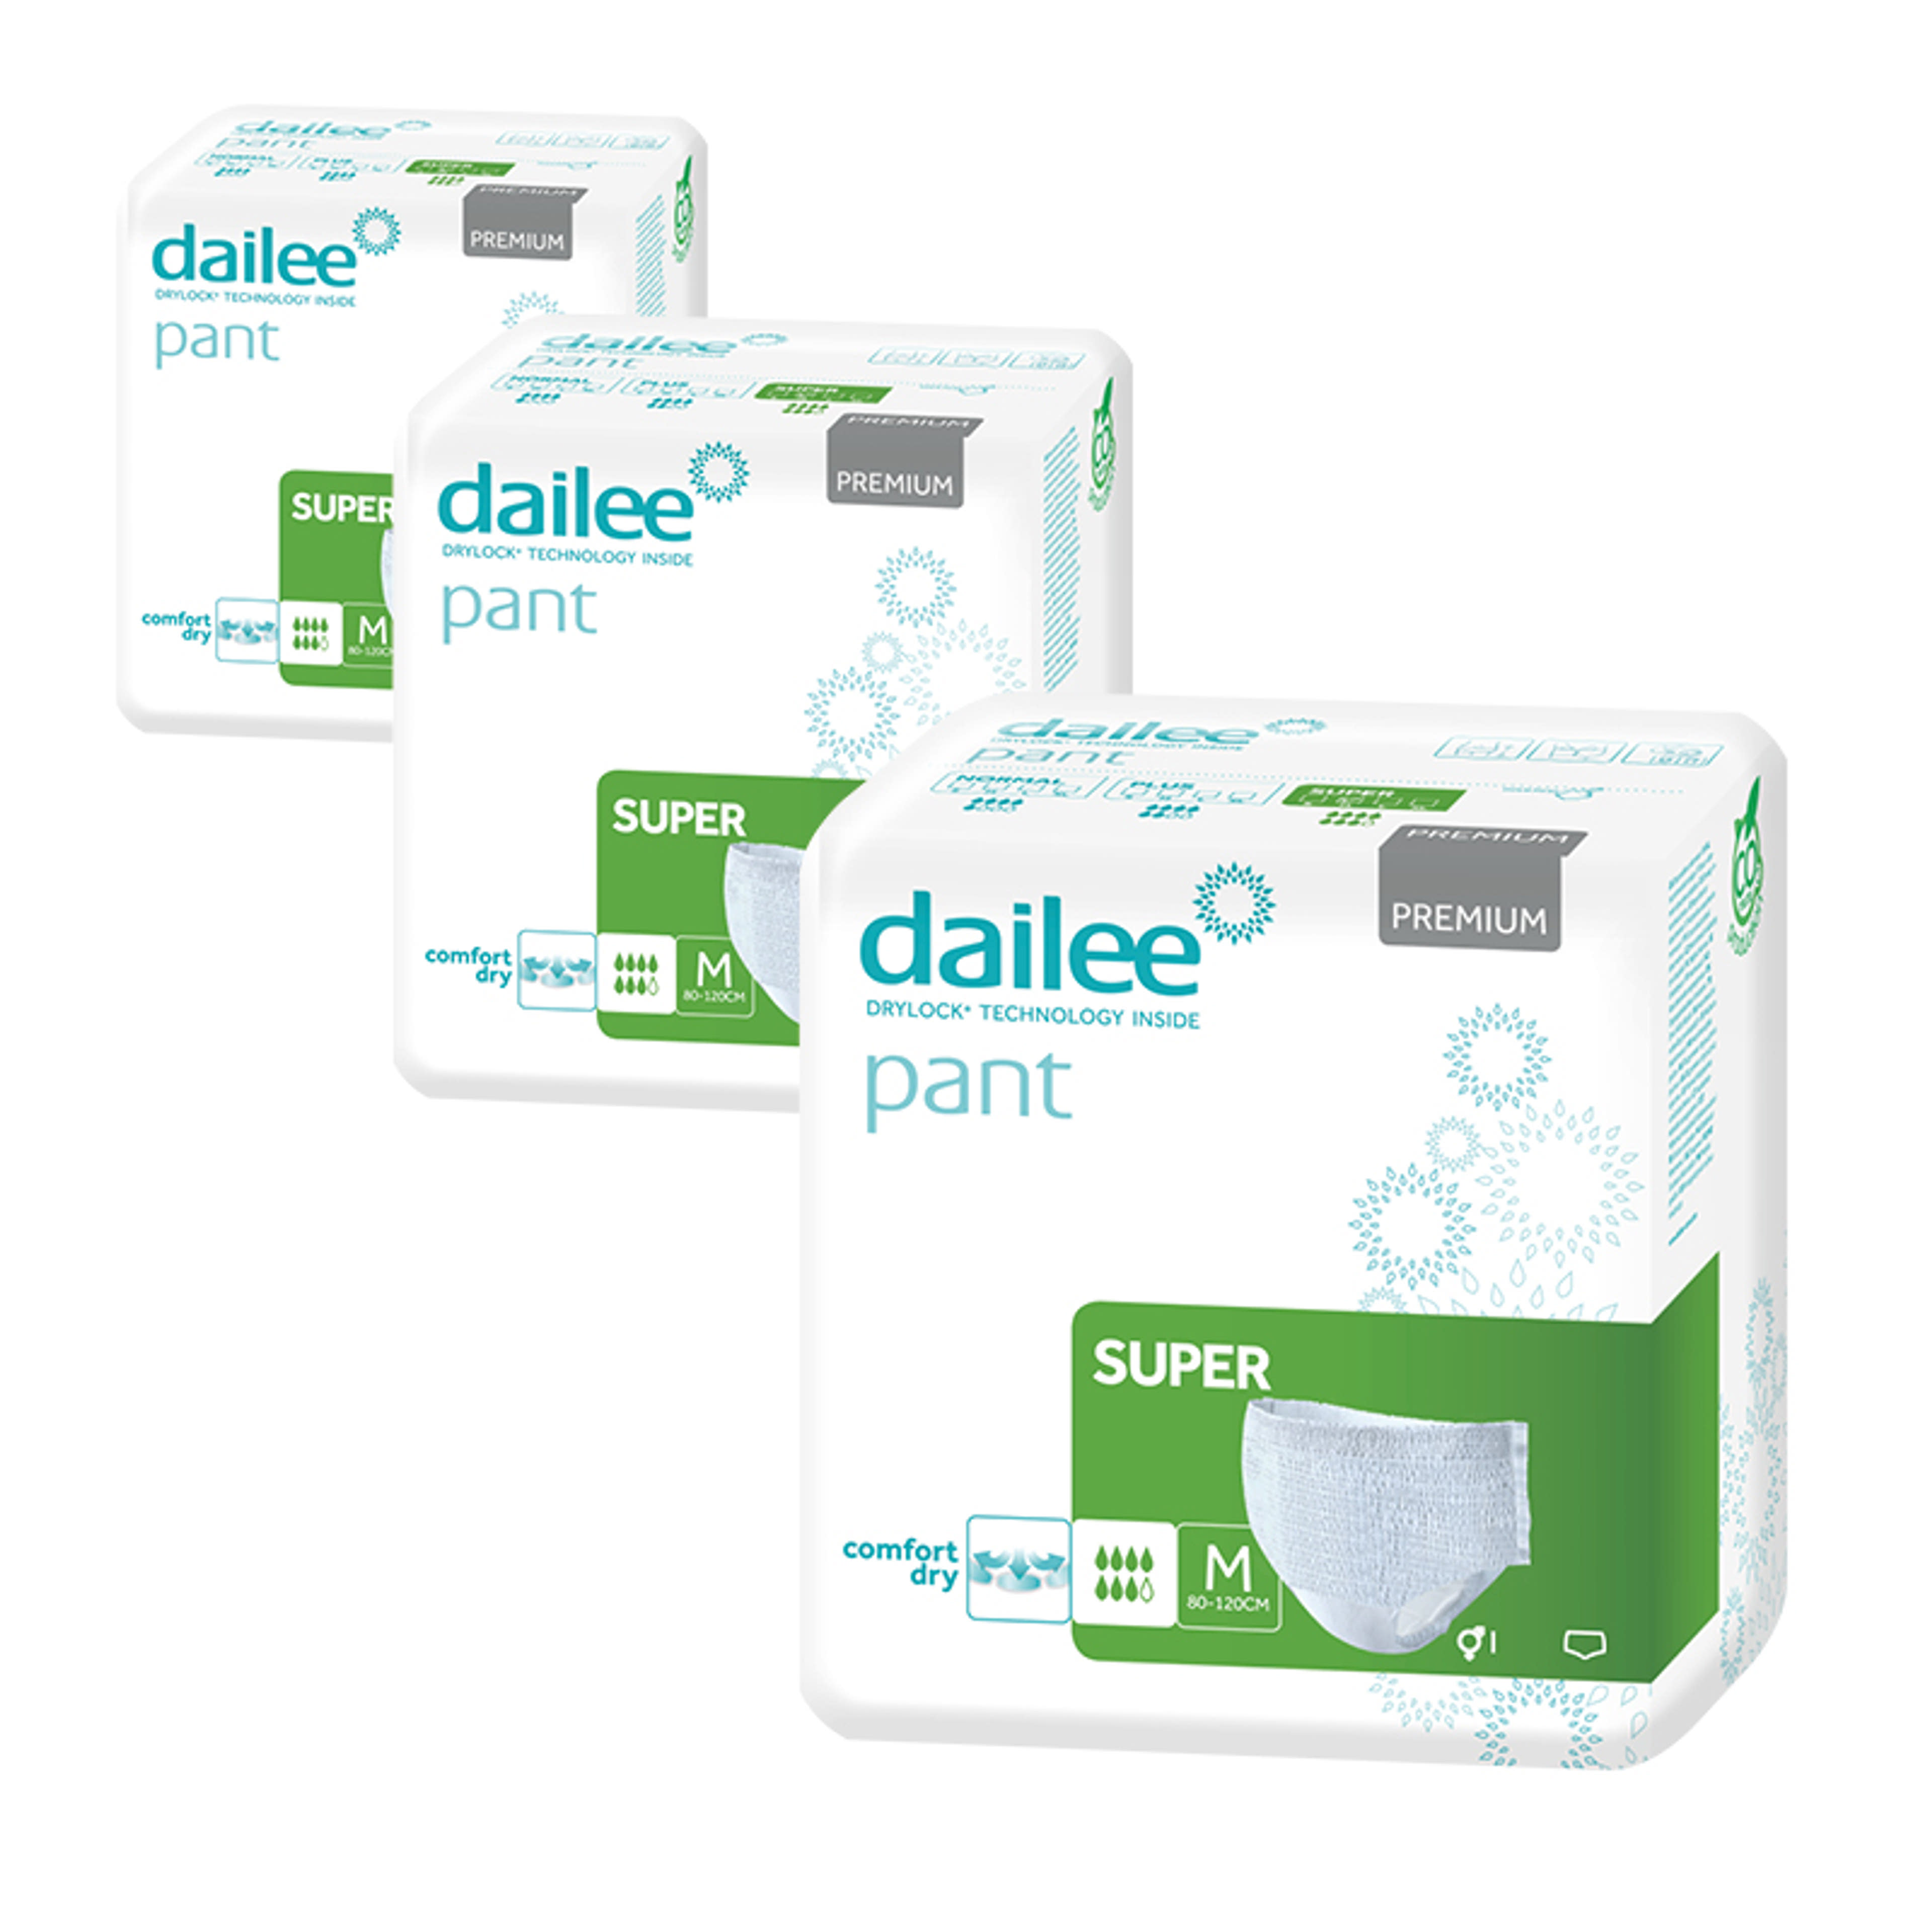 Dailee Pant Premium Super inkontinencia nadrág csomag M-es méret